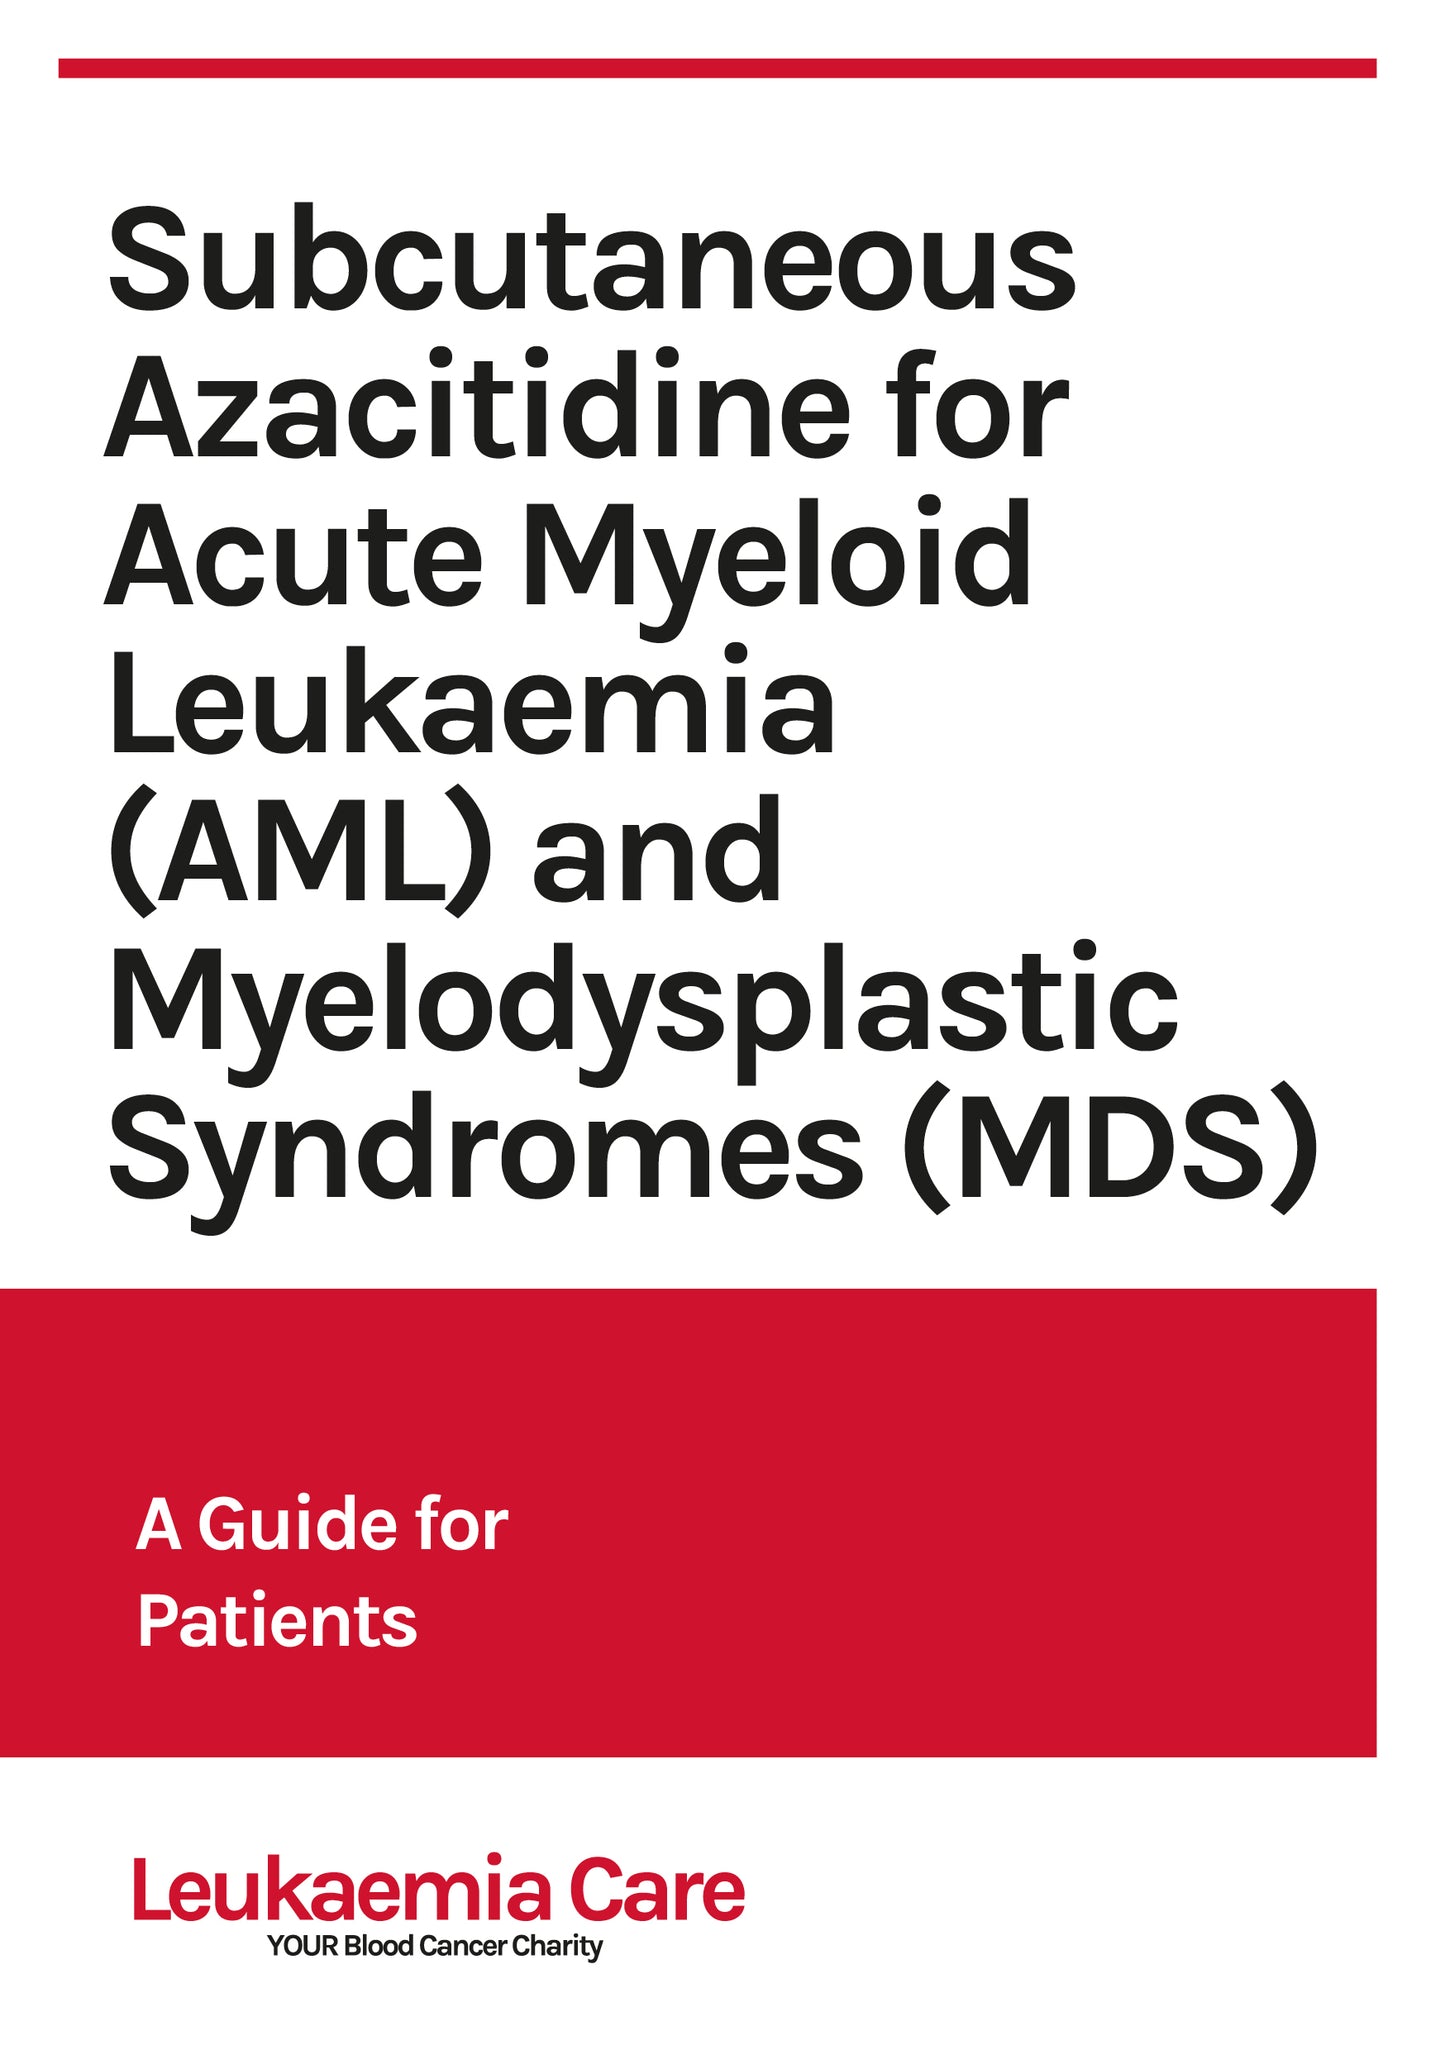 Subcutaneous Azacitidine for Acute Myeloid Leukaemia (AML) and Myelodysplastic Syndromes (MDS)